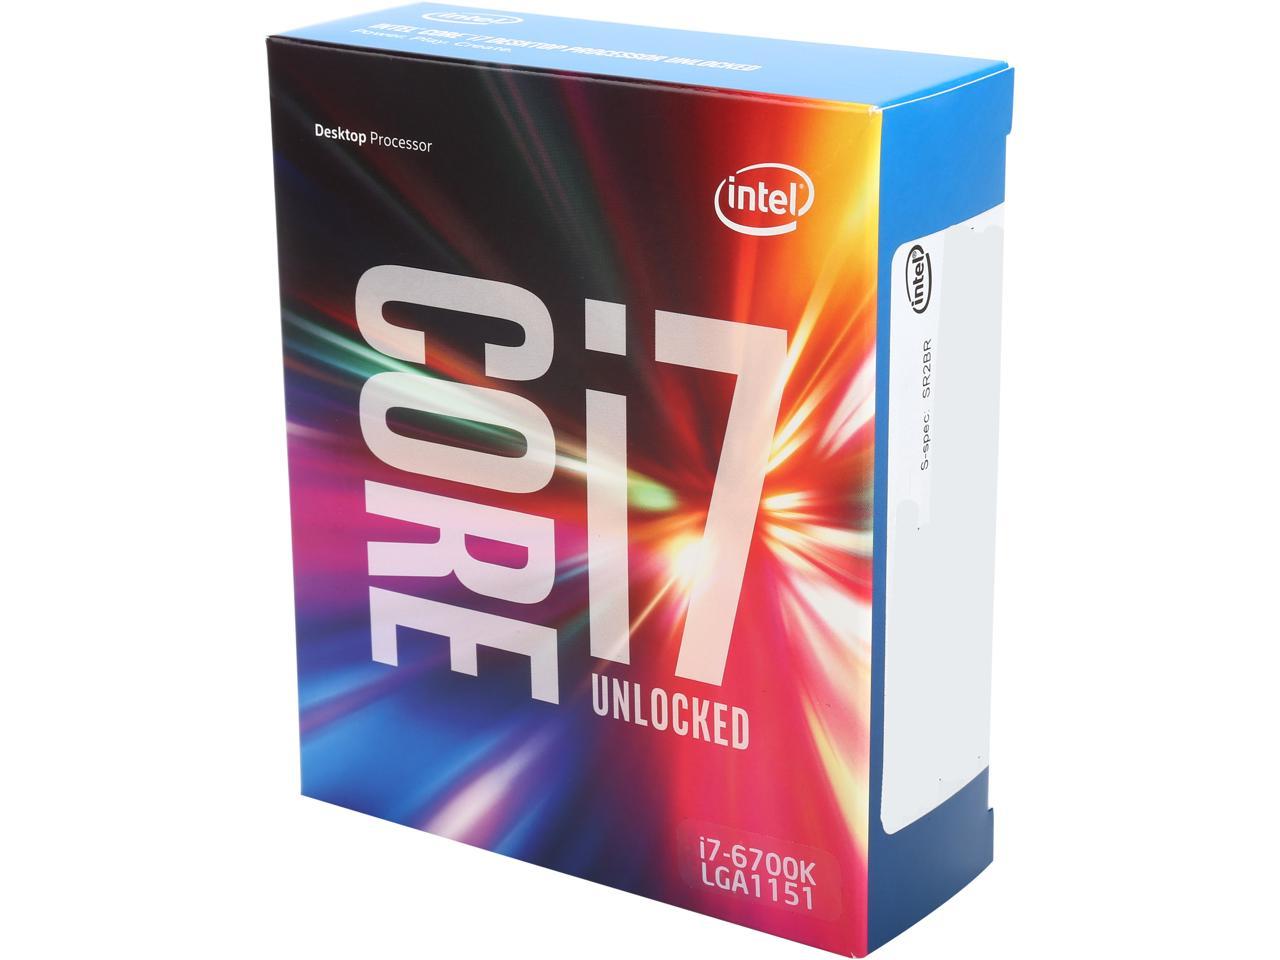 Intel Core i7 6th Gen - Core i7-6700K 8M Skylake Quad-Core 4.0 GHz LGA 1151  91W BX80662I76700K Desktop Processor Intel HD Graphics 530